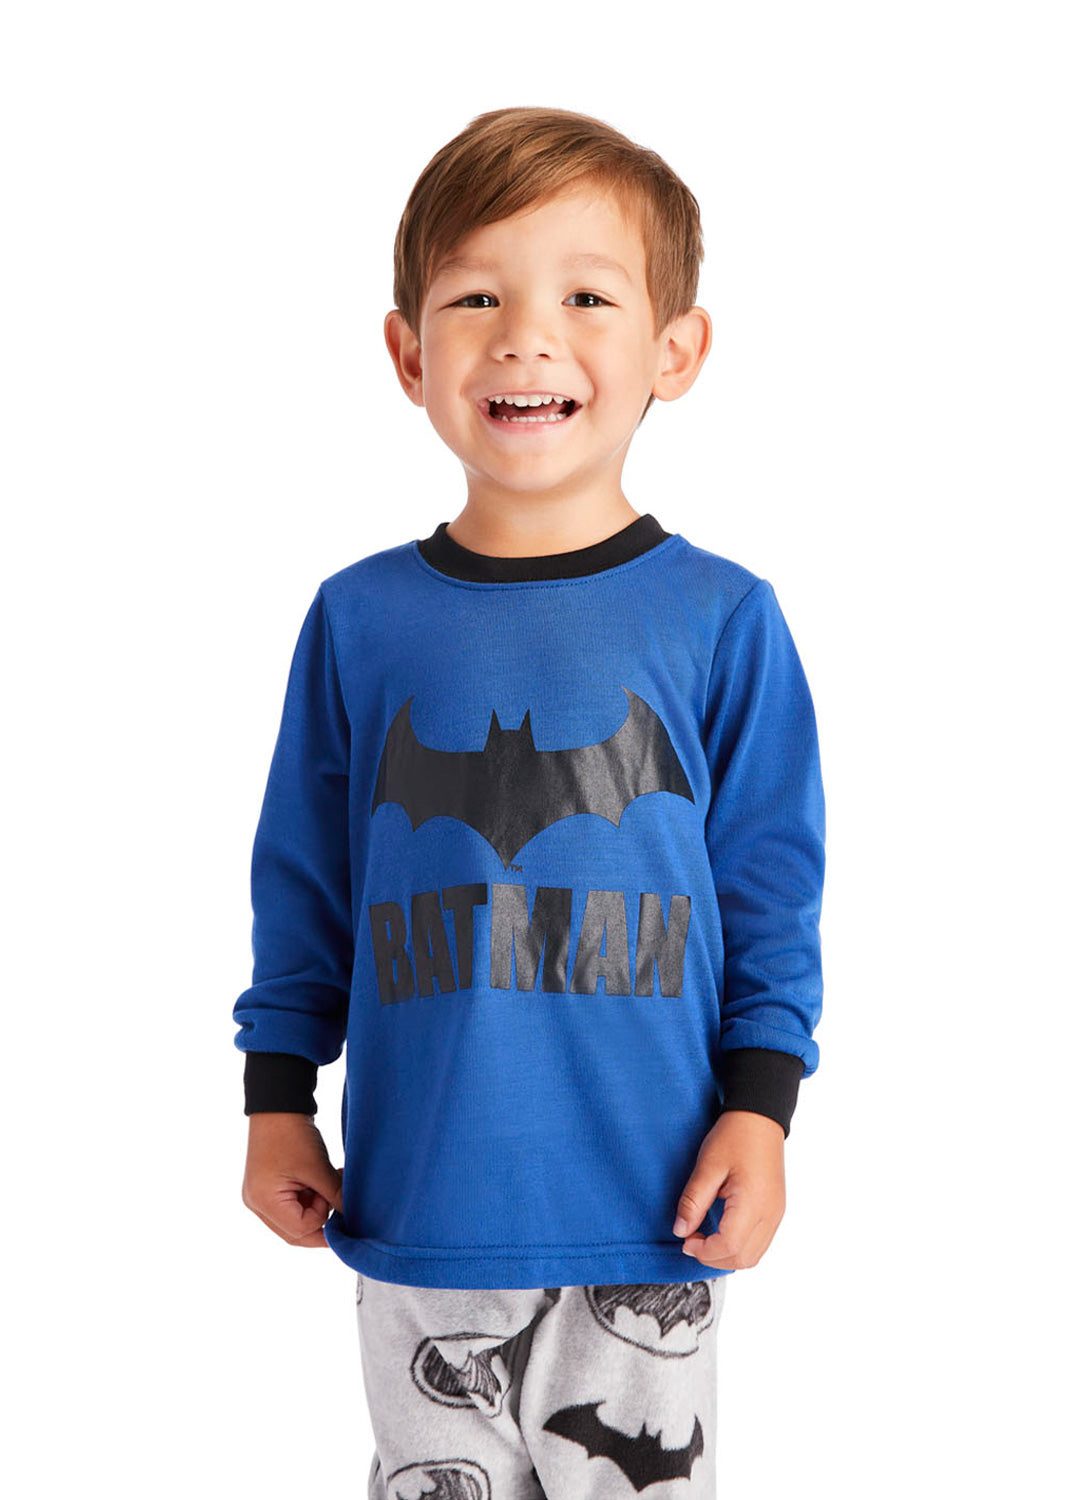 Boys Batman Pajama Set